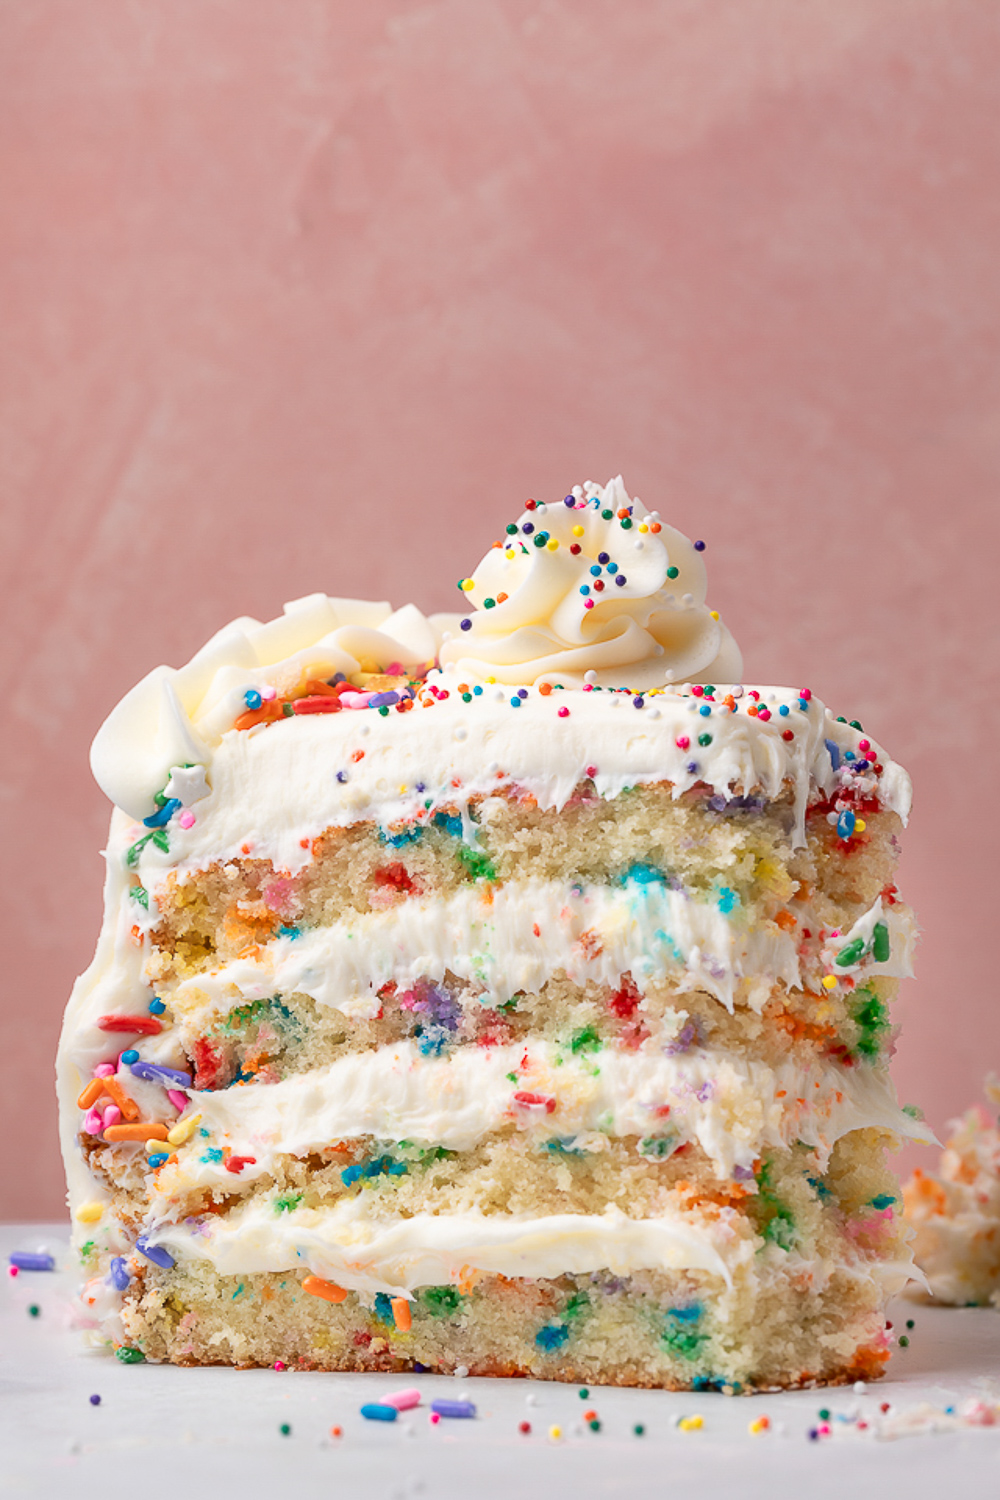 25 Best Birthday Cake Recipes - Recipes For Holidays